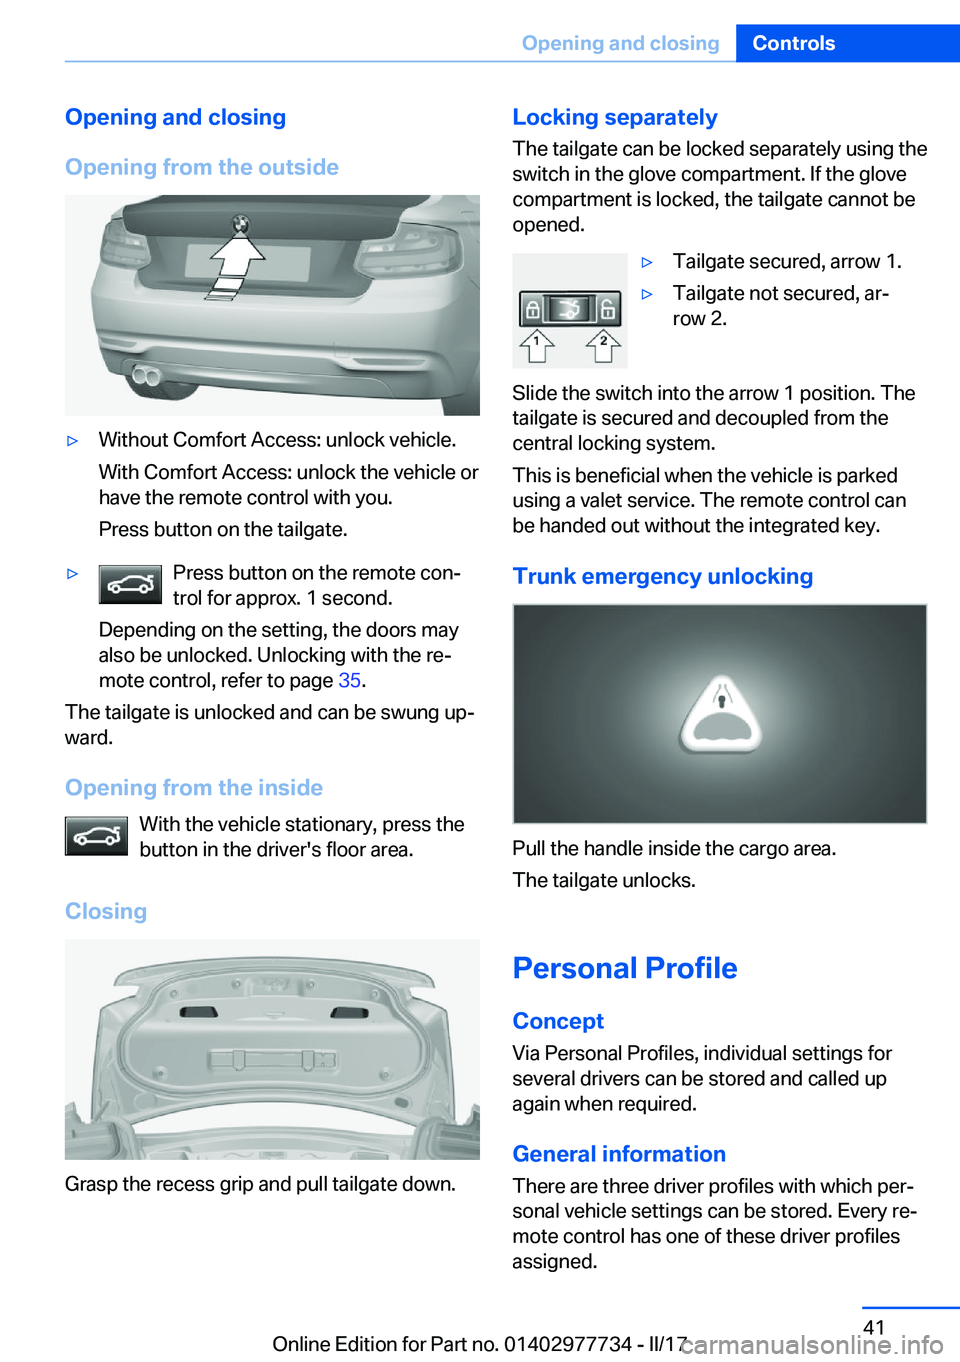 BMW 2 SERIES COUPE 2017 Service Manual �O�p�e�n�i�n�g��a�n�d��c�l�o�s�i�n�g
�O�p�e�n�i�n�g��f�r�o�m��t�h�e��o�u�t�s�i�d�e'y�W�i�t�h�o�u�t� �C�o�m�f�o�r�t� �A�c�c�e�s�s�:� �u�n�l�o�c�k� �v�e�h�i�c�l�e�. �W�i�t�h� �C�o�m�f�o�r�t� �A